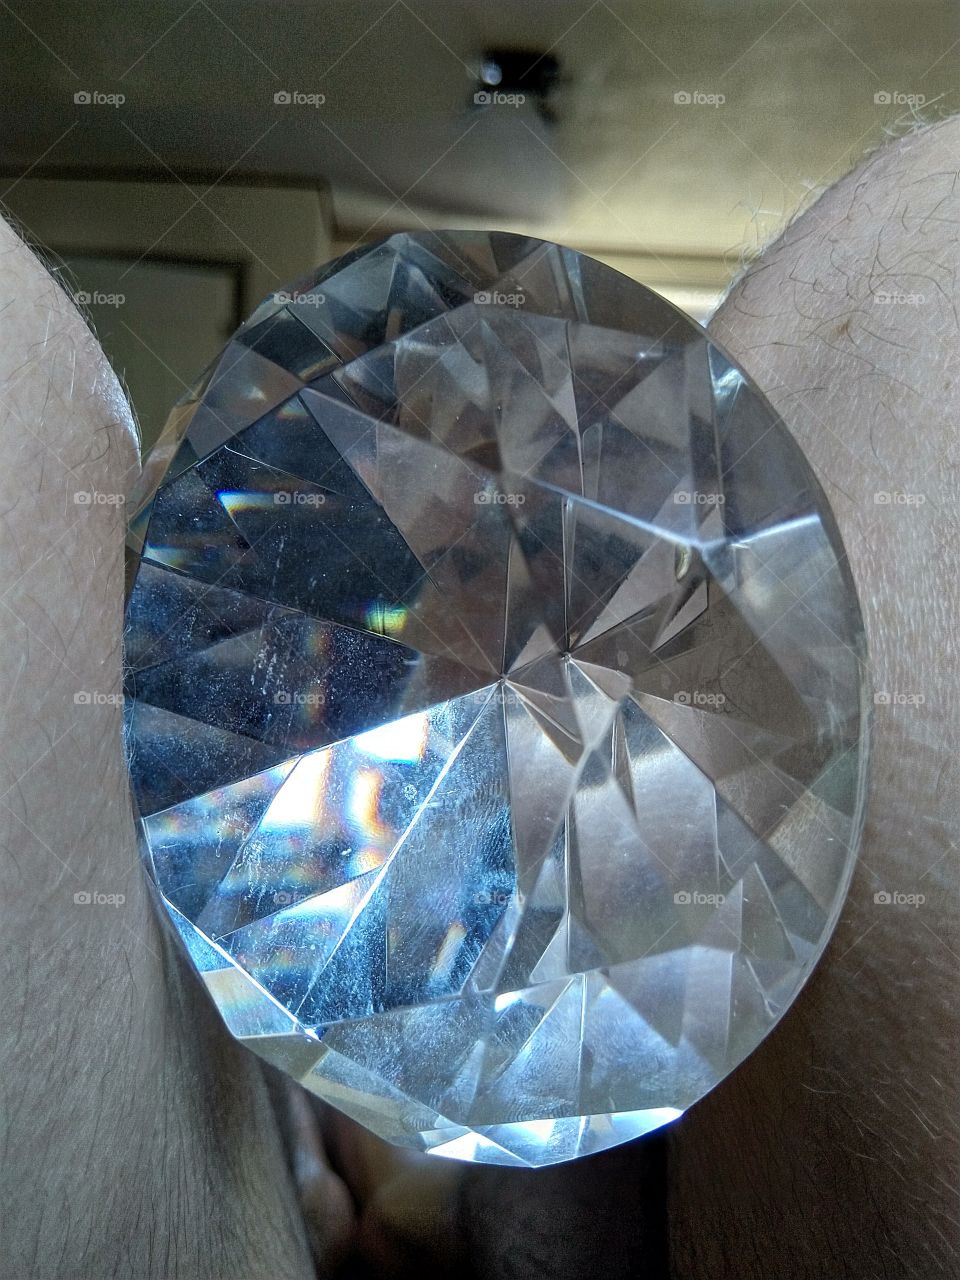 a glass diamond in between my legs